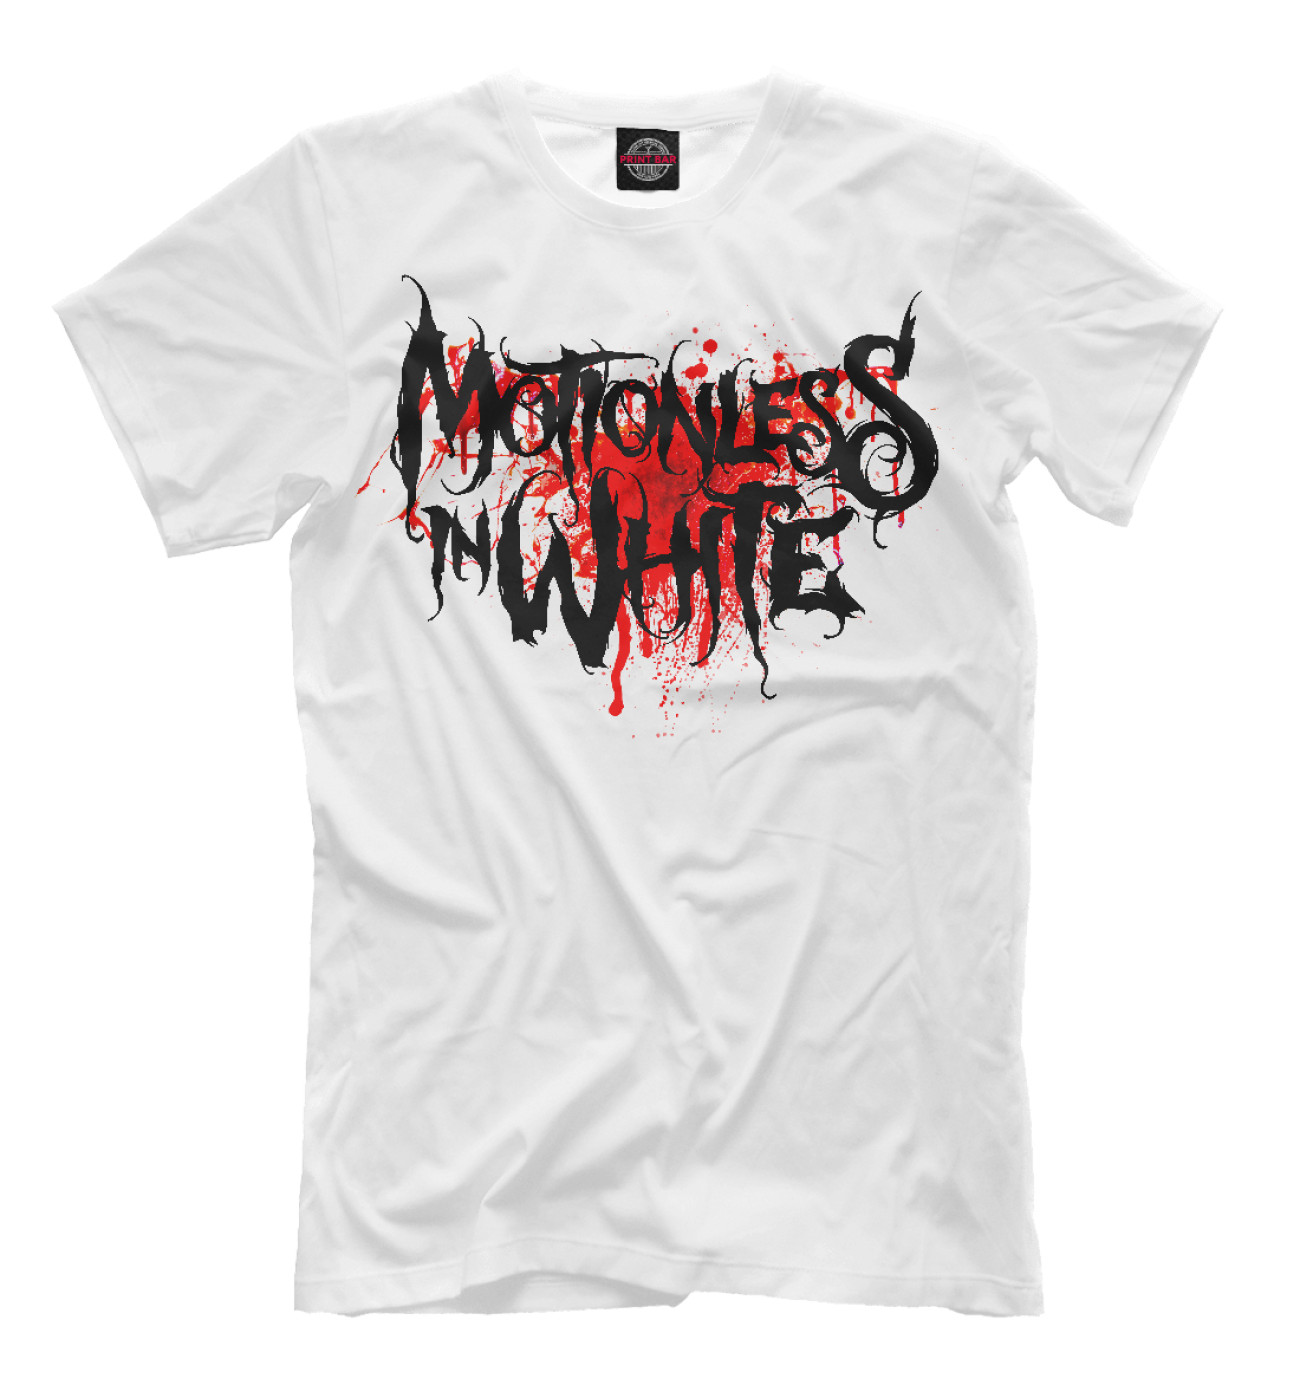 Мужская Футболка Motionless In White Blood Logo, артикул: MZK-411447-fut-2